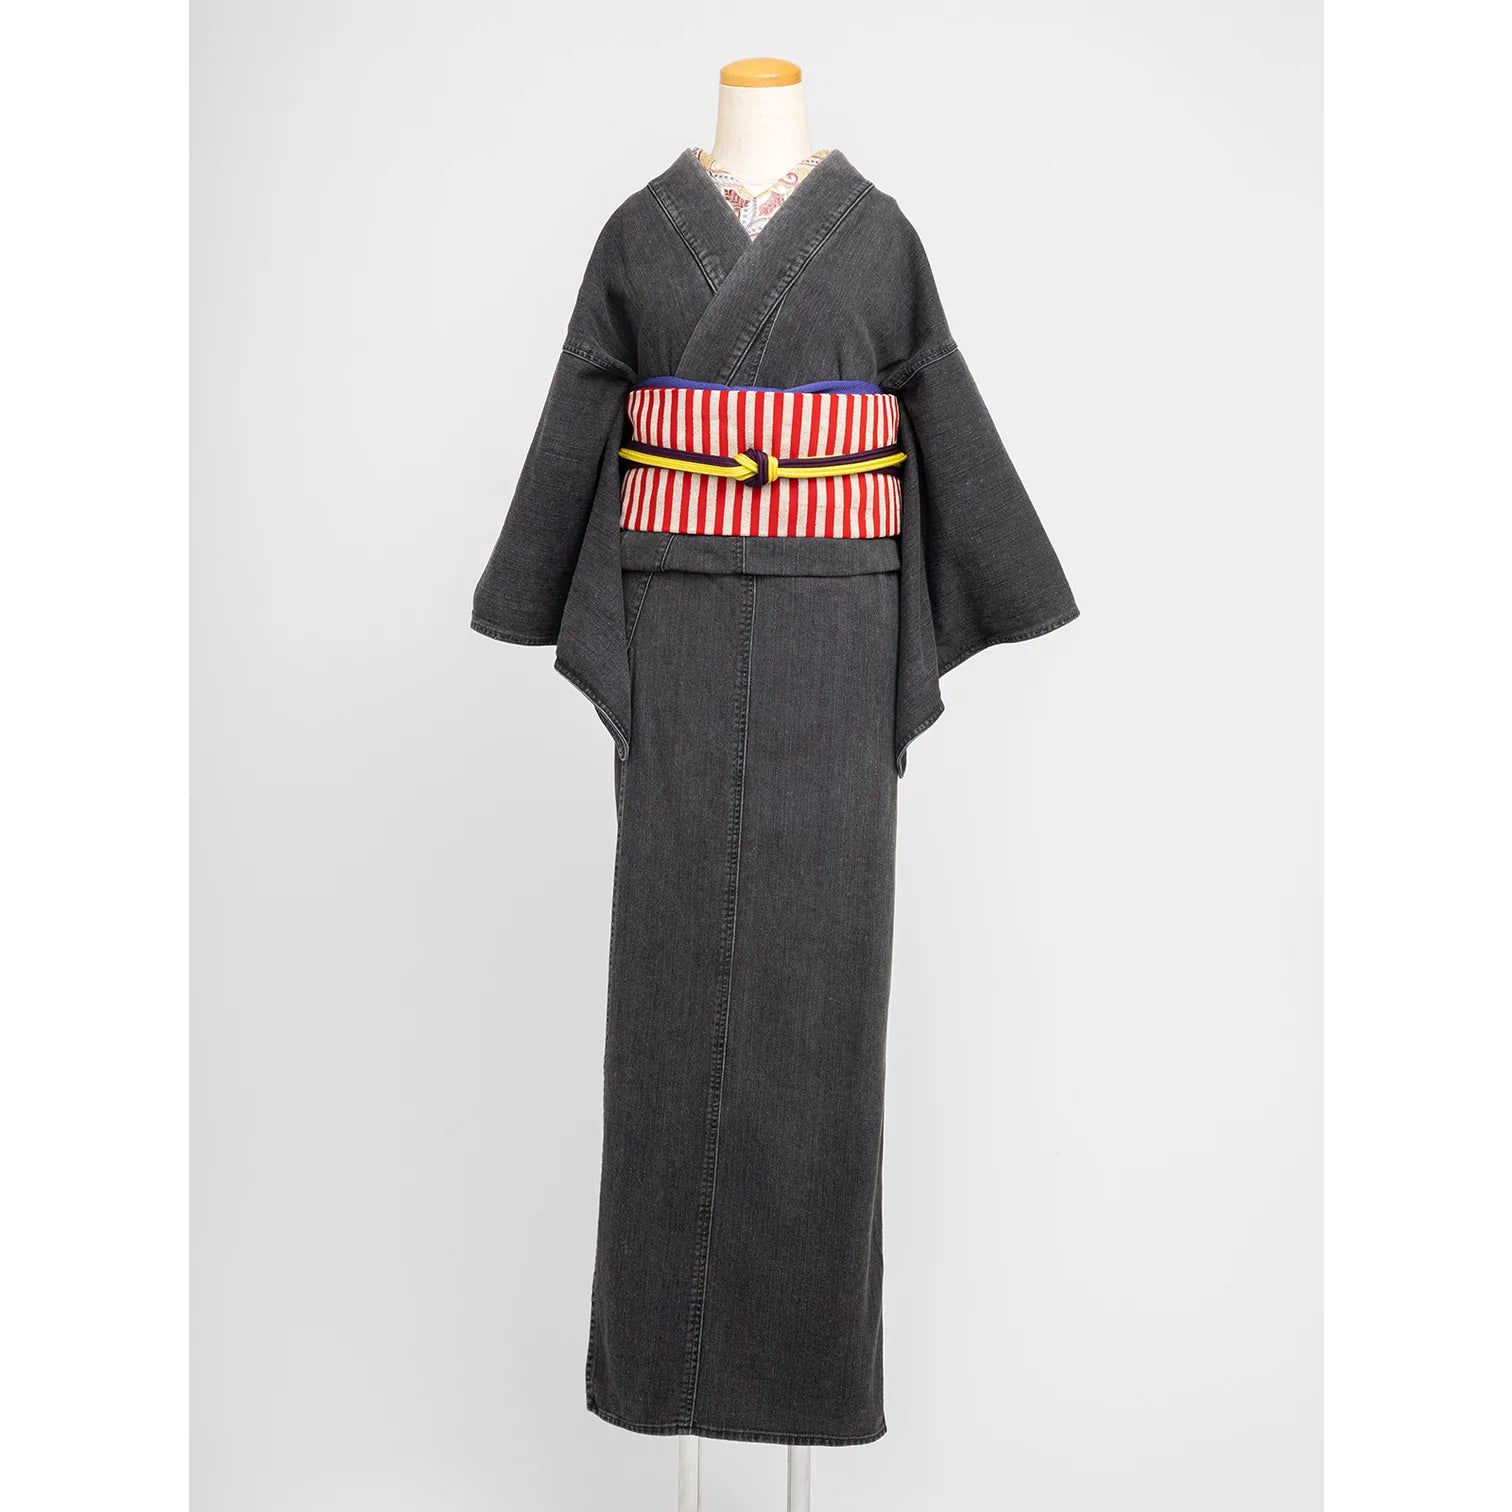 Nagoya obi "Kirakojima" KAPUKI original: 9 inches | Pure silk | Antique reproduction pattern (as finished)